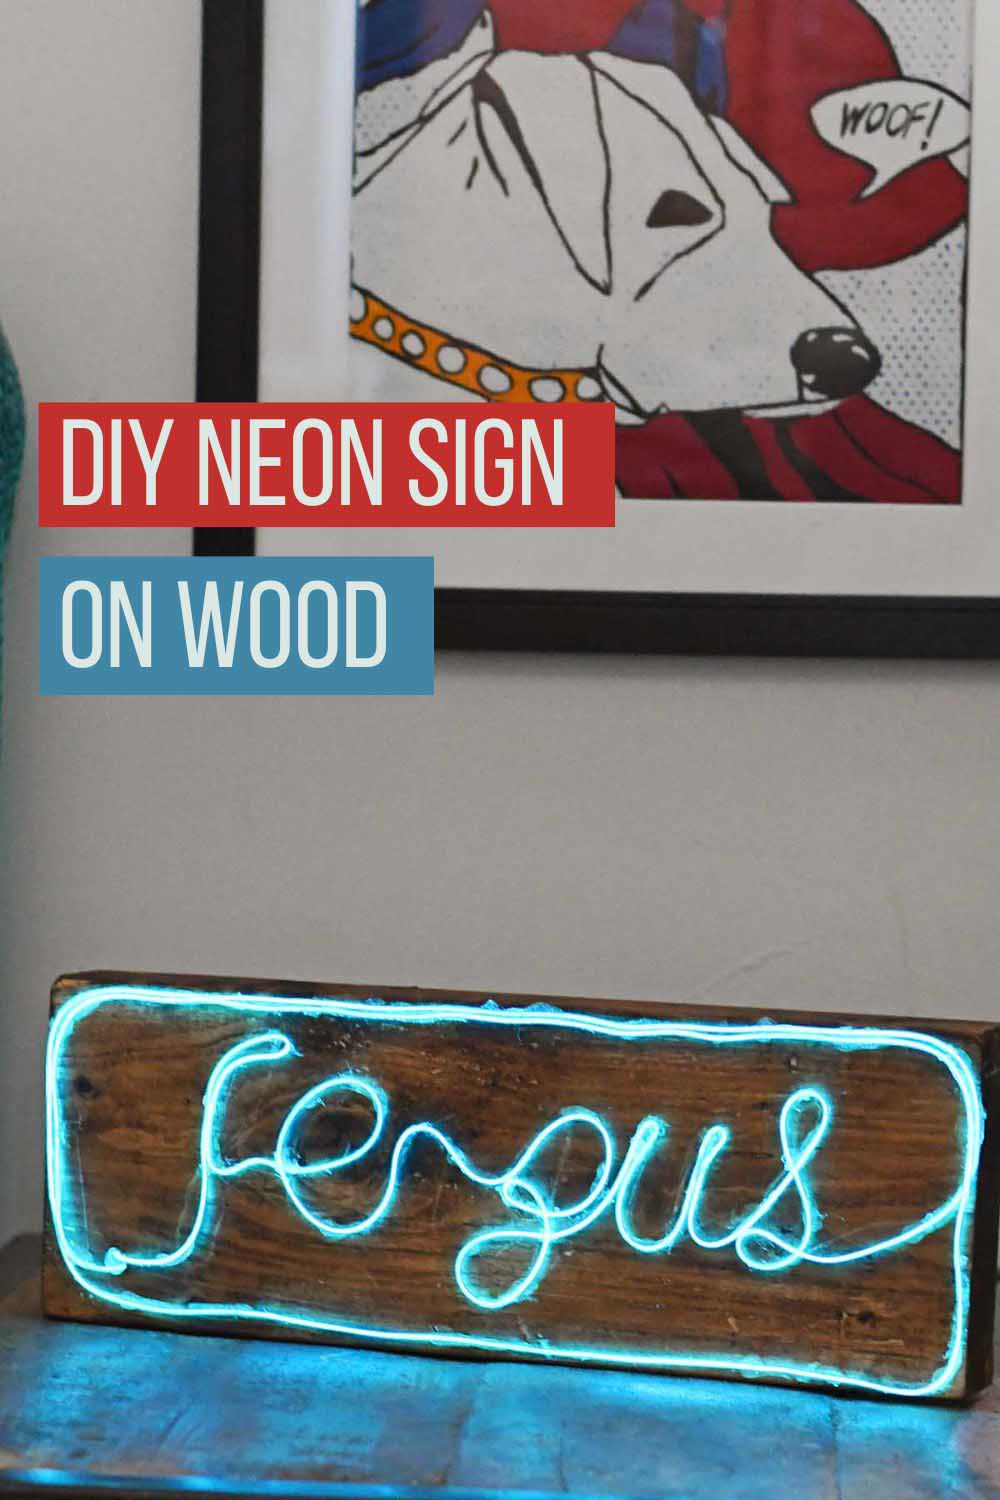 DIY-neon sign on wood